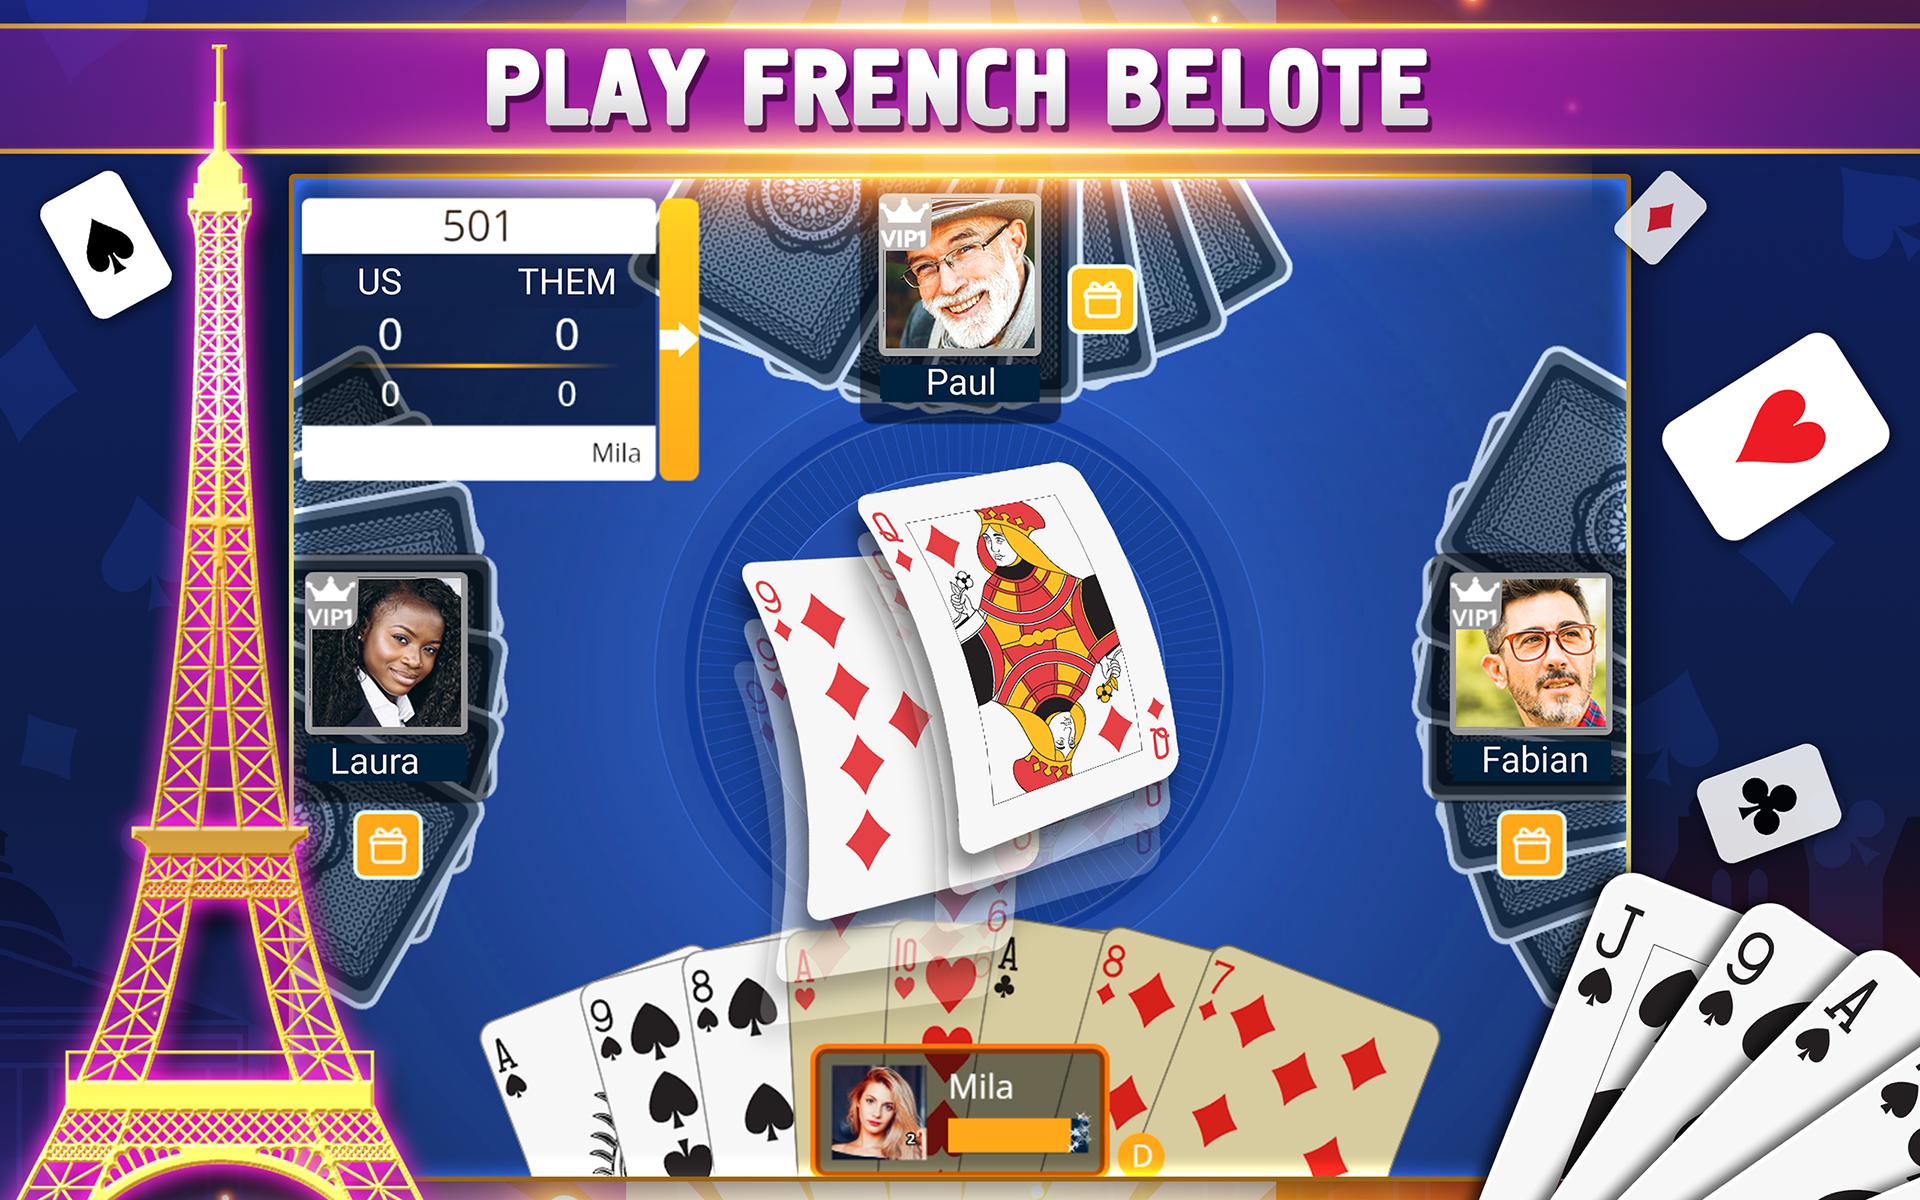 VIP Belote French Belote Online Multiplayer 3.9.0.77 Screenshot 17